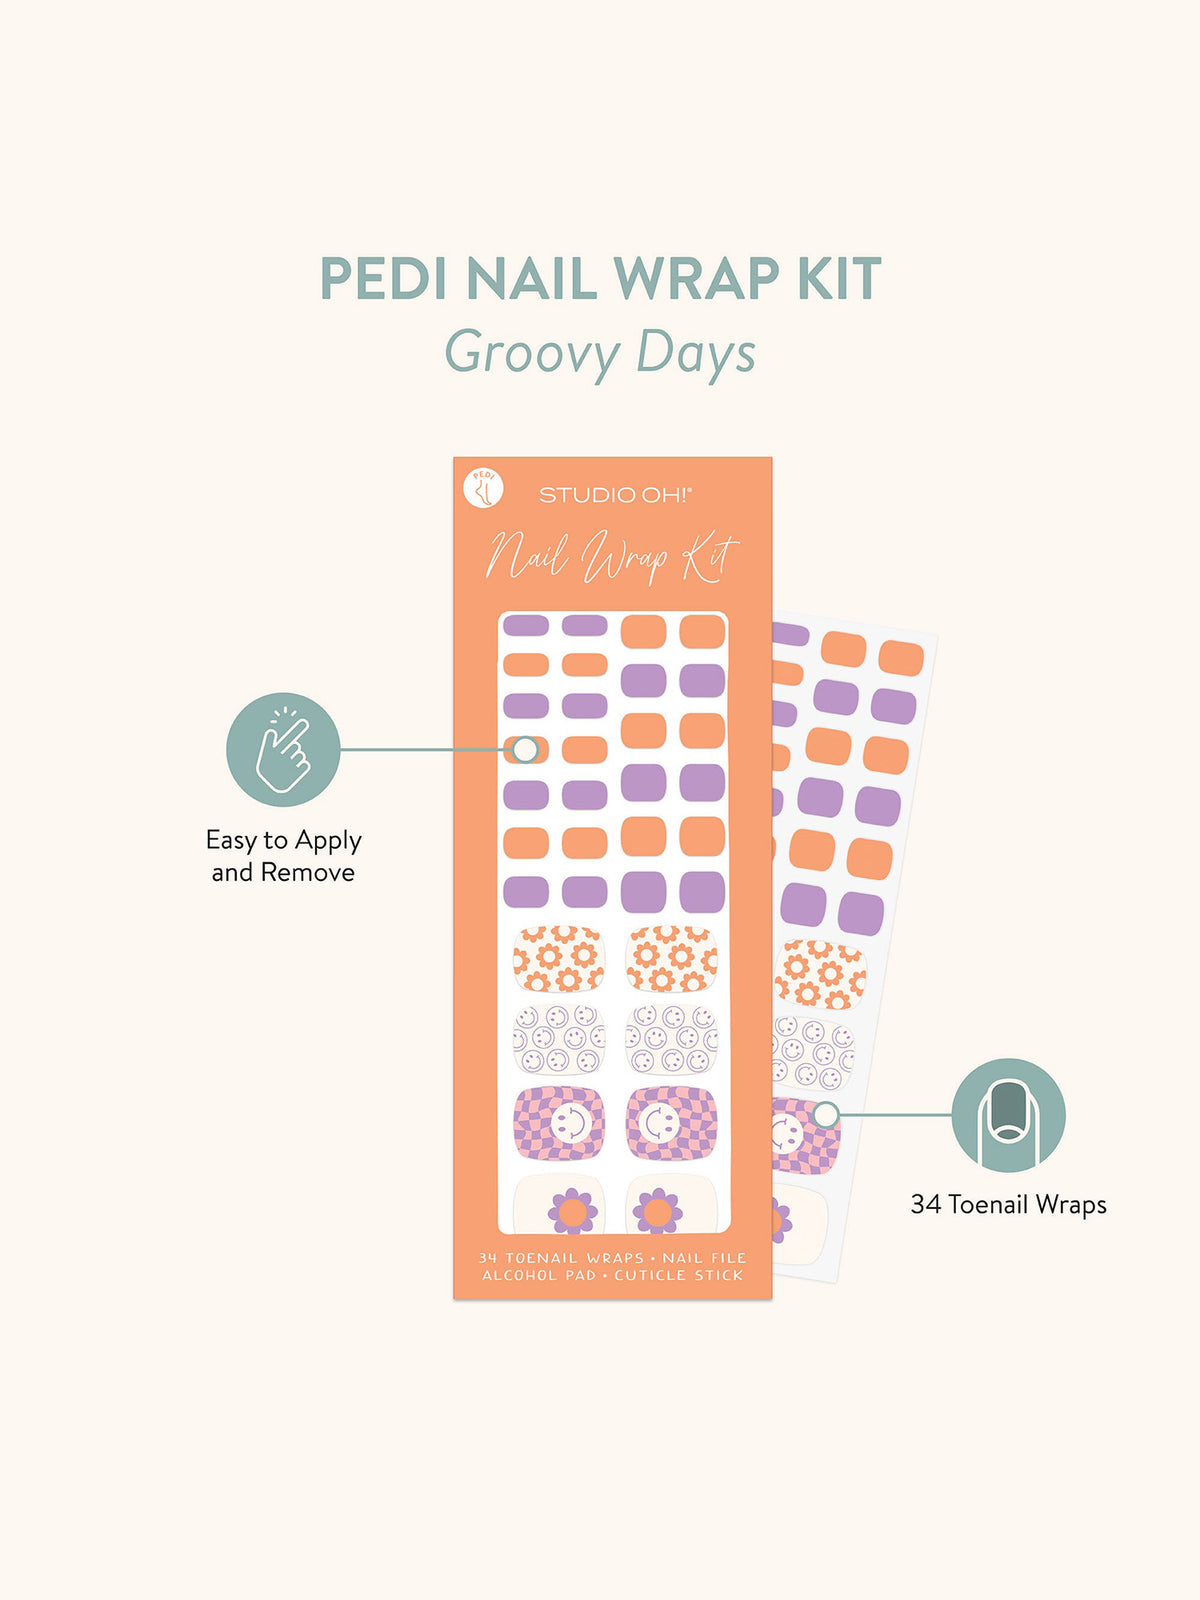 Groovy Days Pedi Nail Wrap Kit